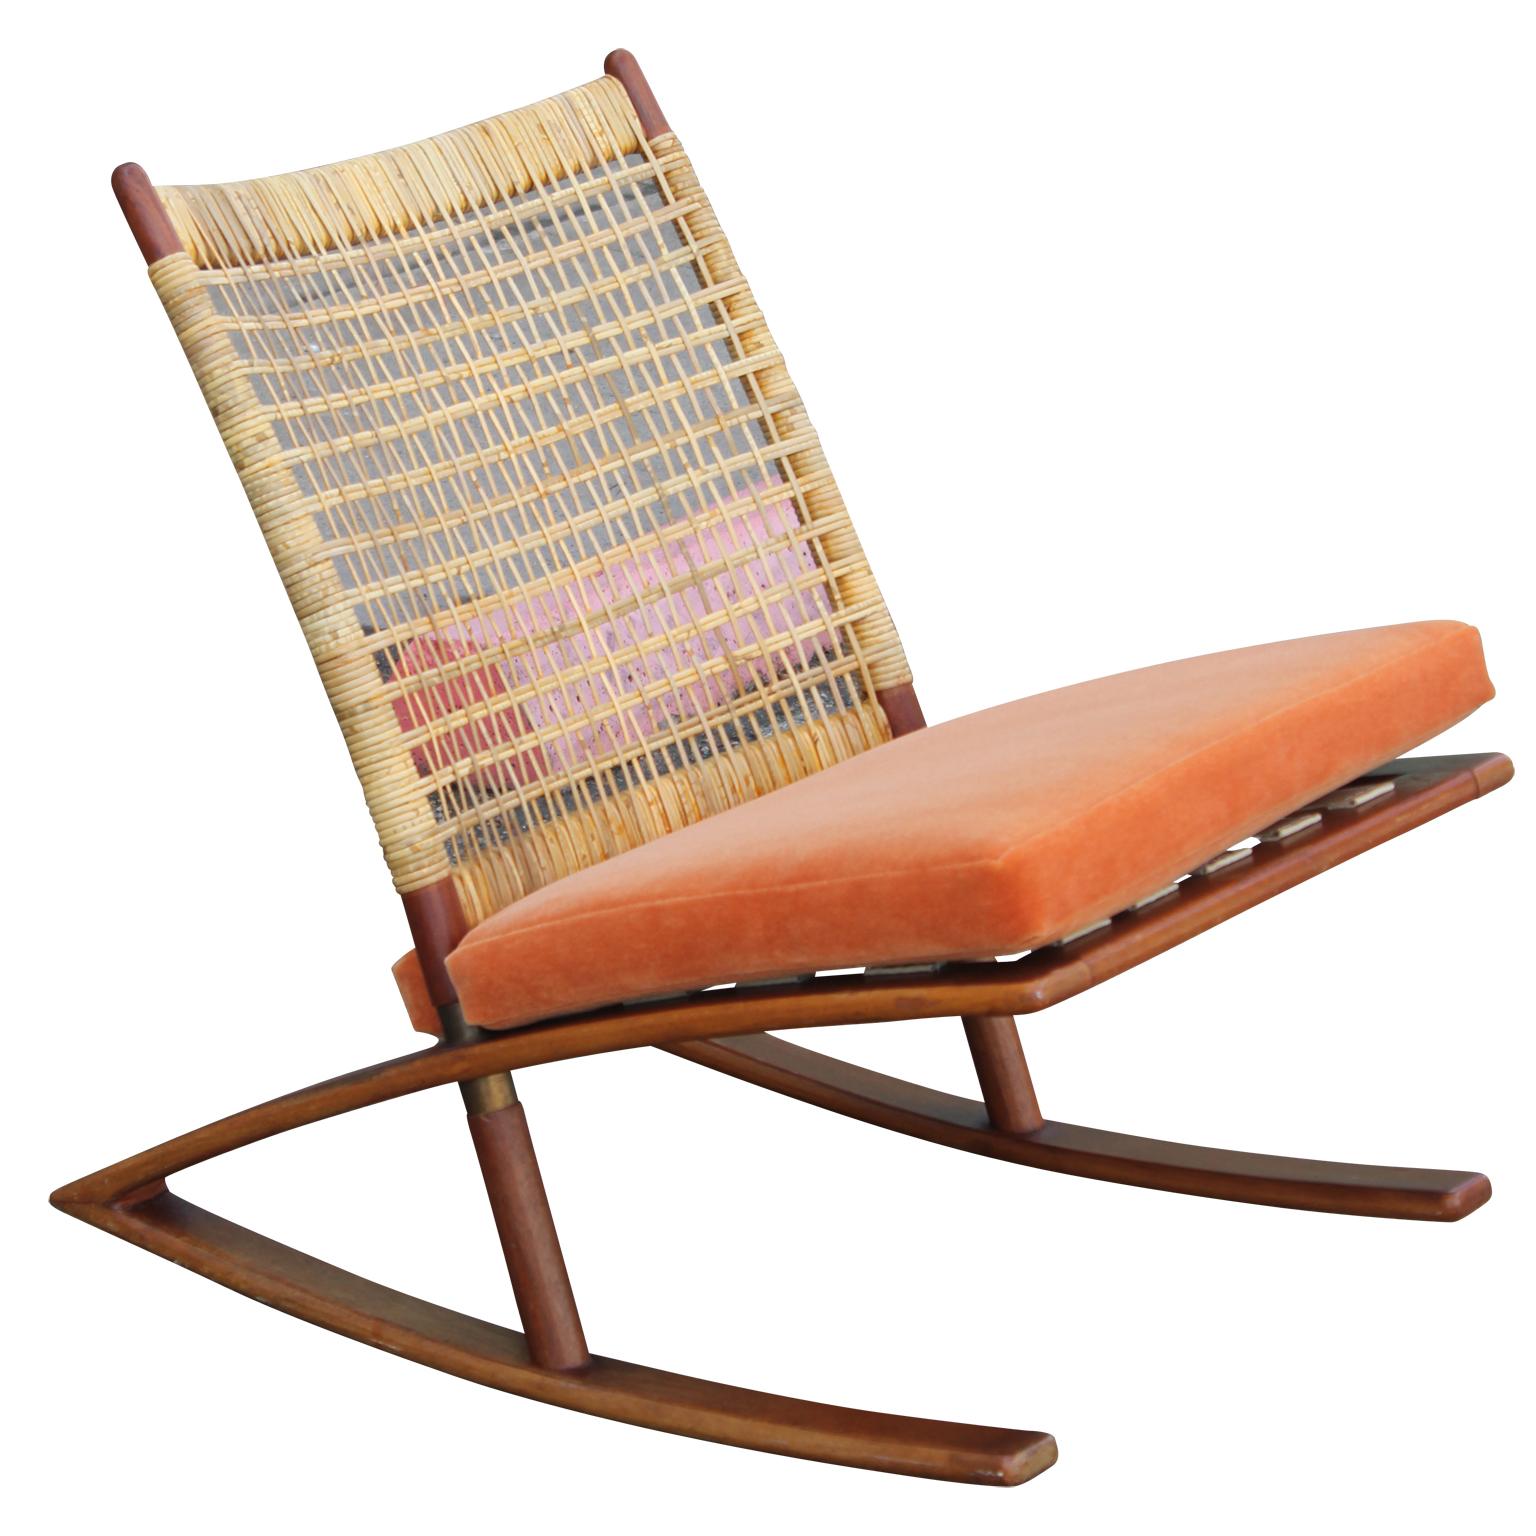 Modern Fredrik Kayser Teak Cane and Leather Strapping Rocking Chair